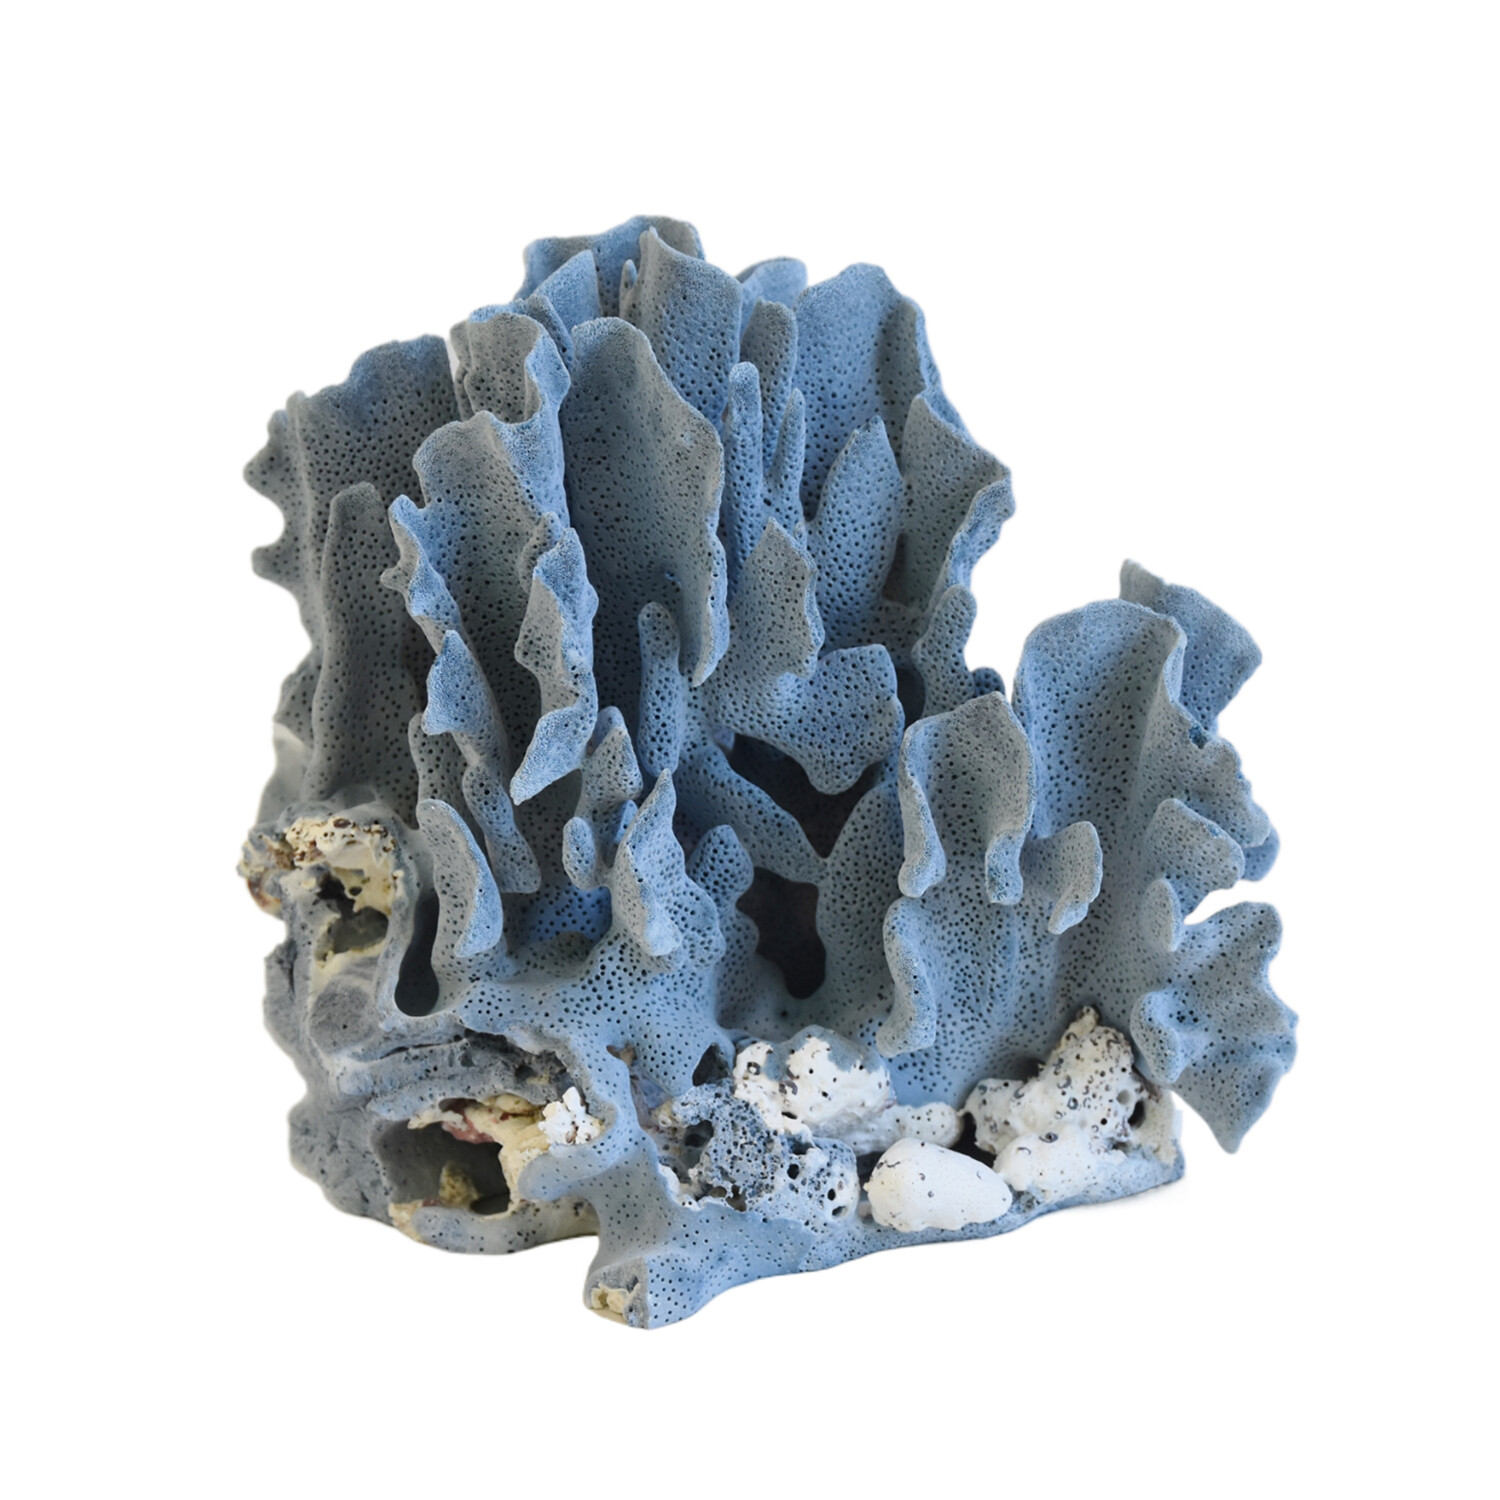 Coastal Nautical Blue Coral Specimen - Prized Pig by Mike Seratt